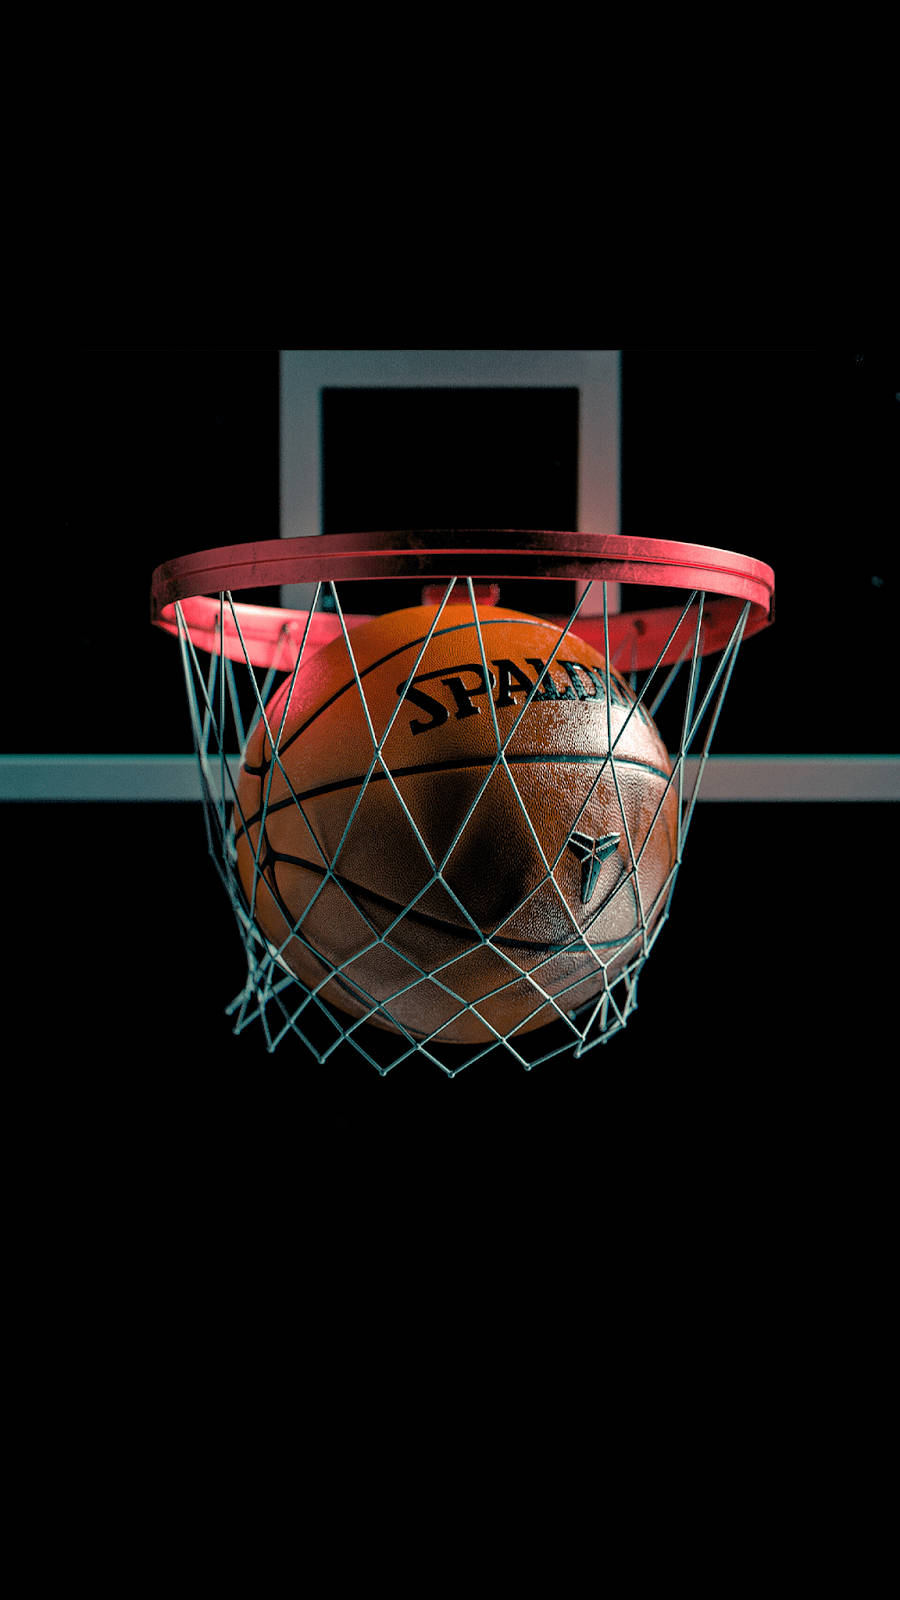 Hd Basketball Ball In Ring Wallpaper